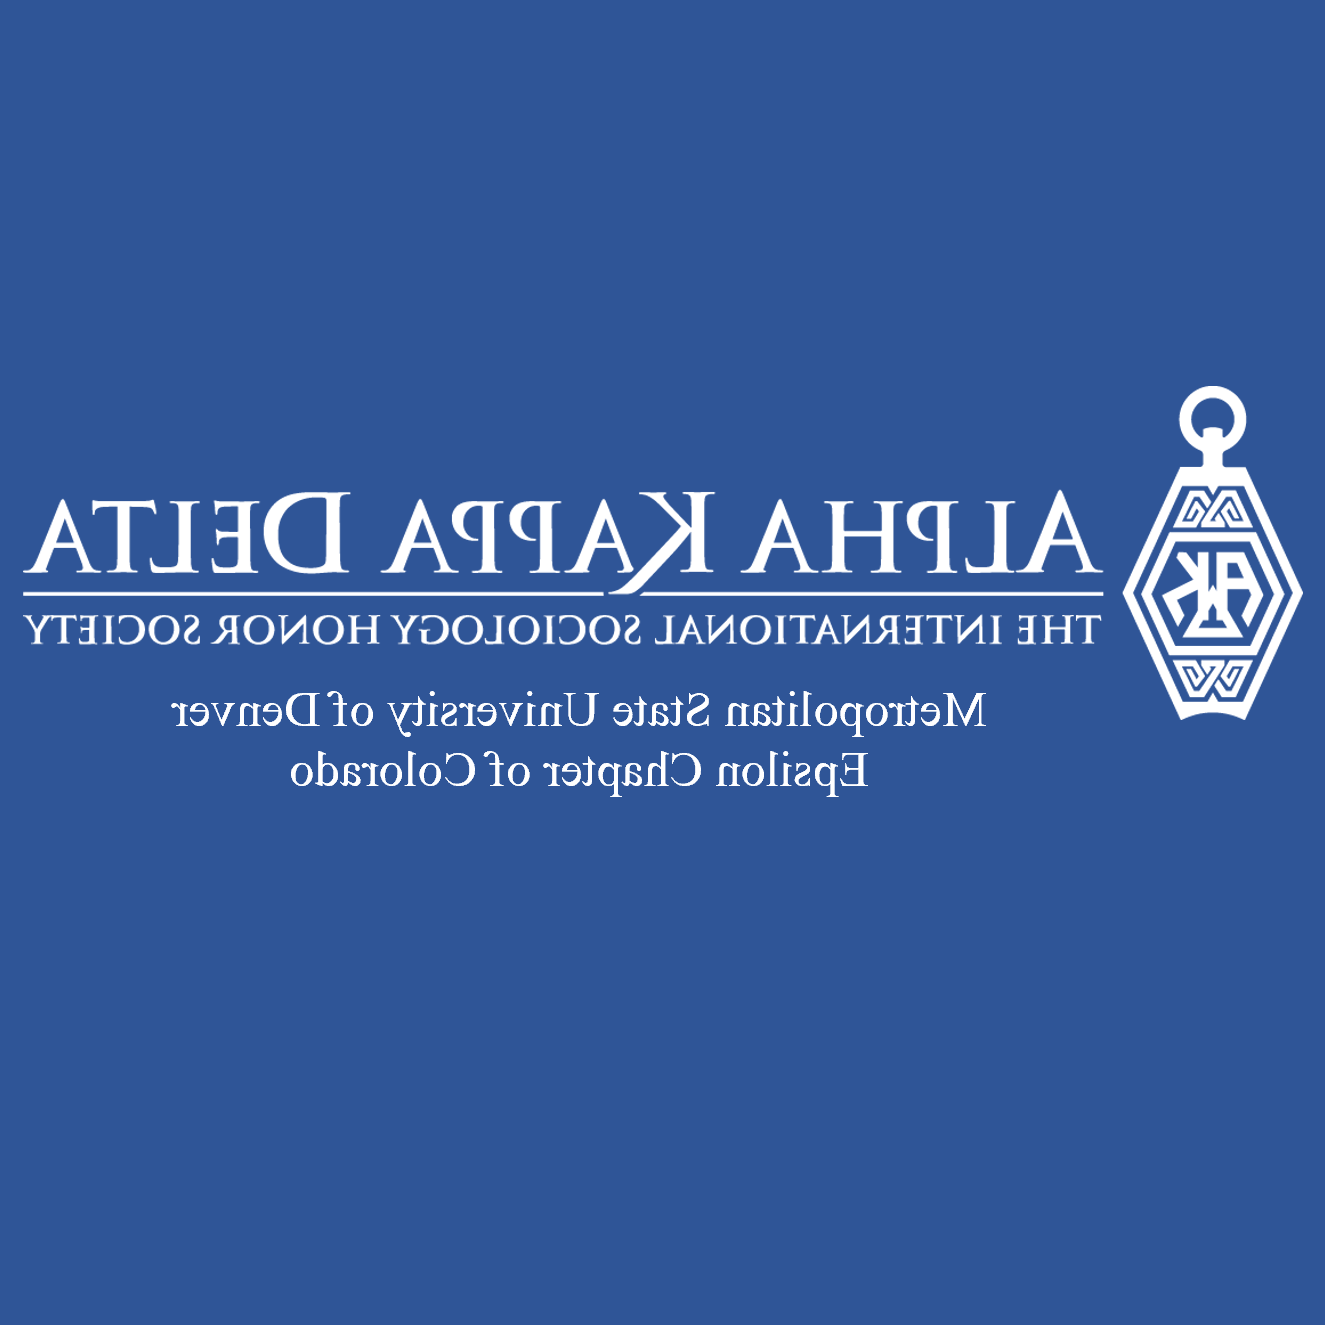 Alpha Kappa Delta International Sociology Honor Society Logo